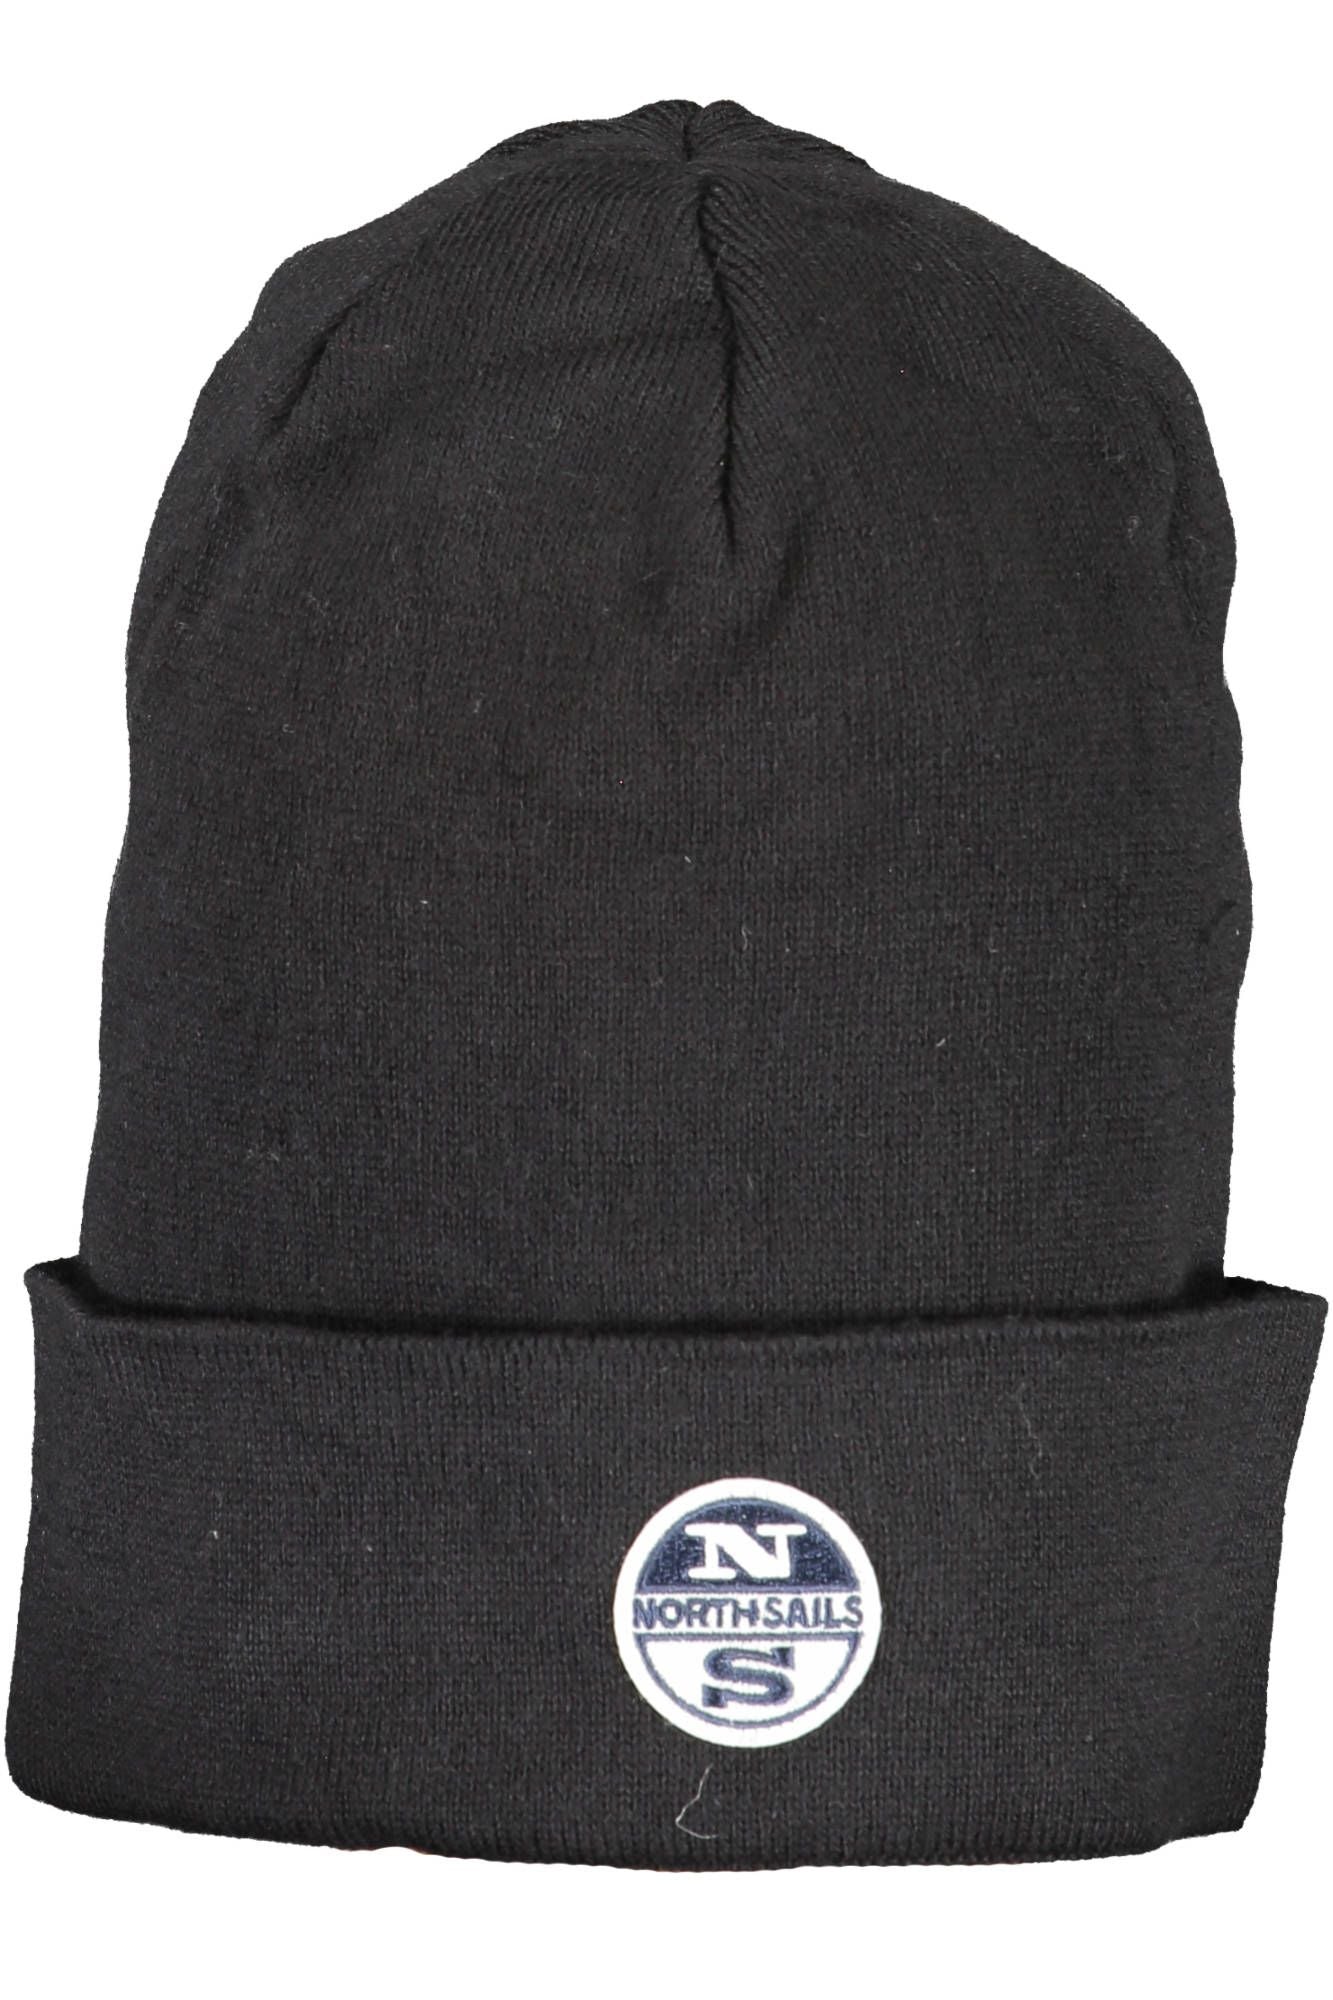 Sleek Black Cotton Cap with Iconic Logo